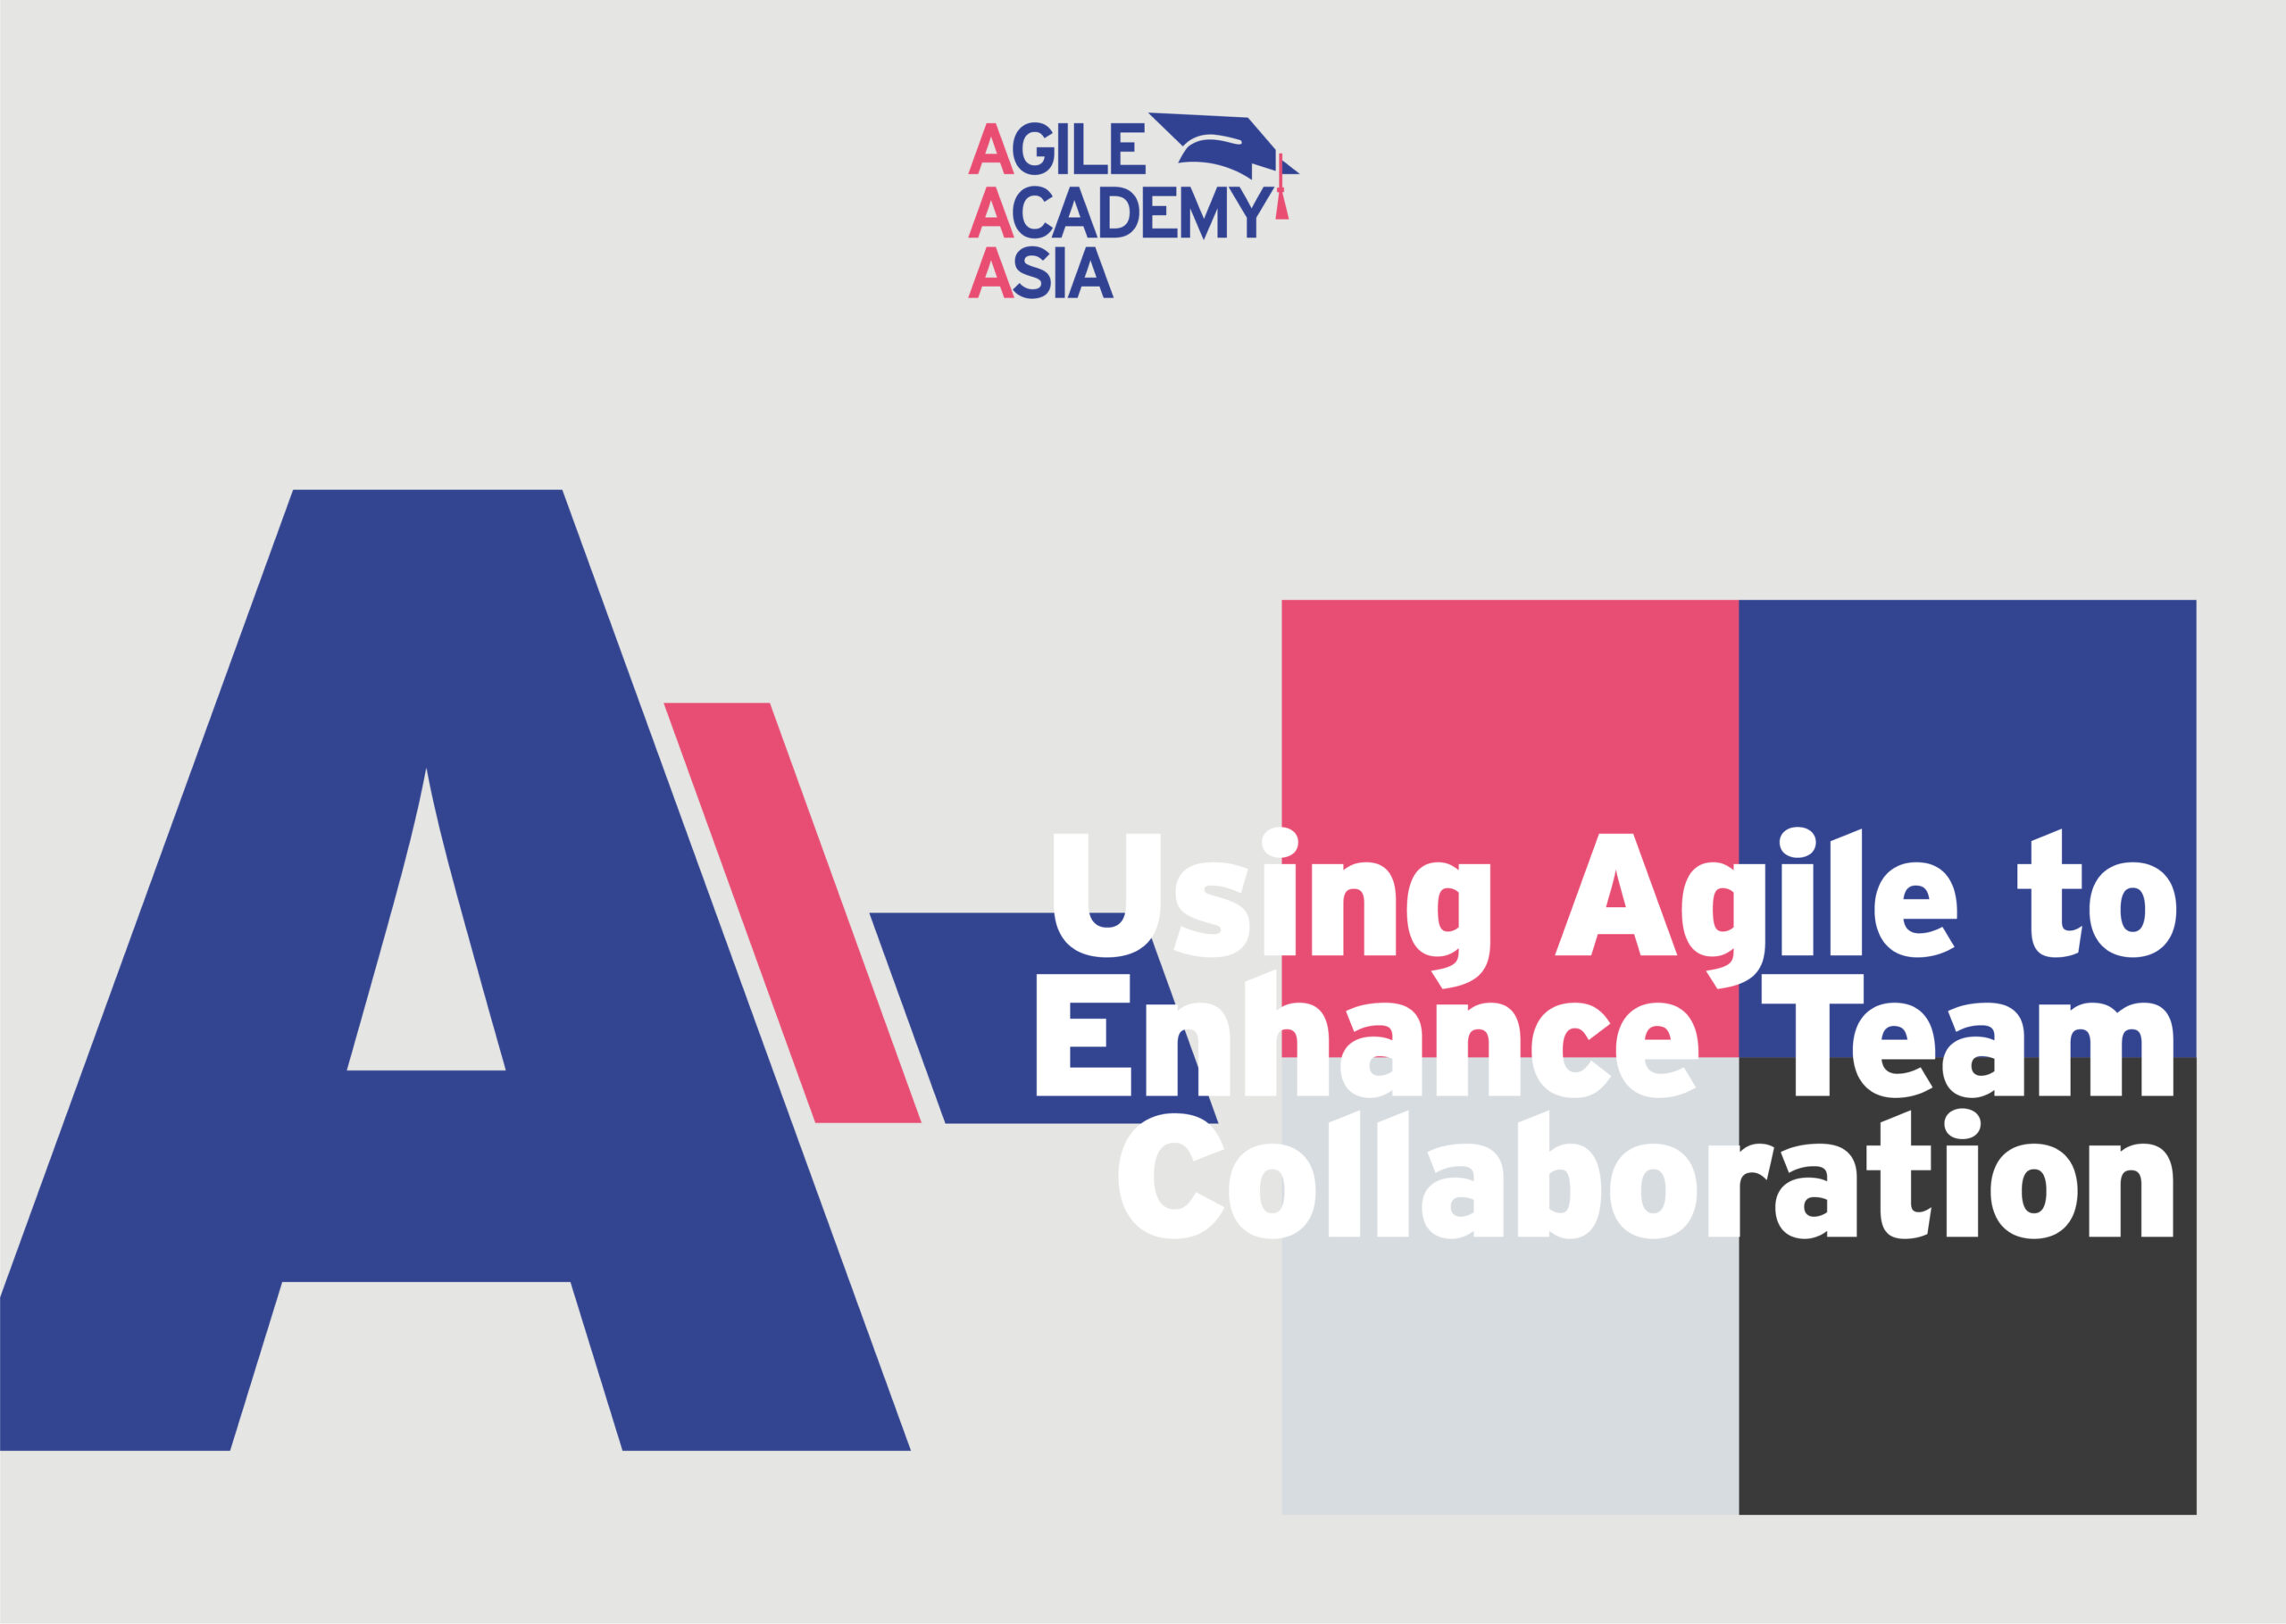 Using Agile to Enhance Team Collaboration